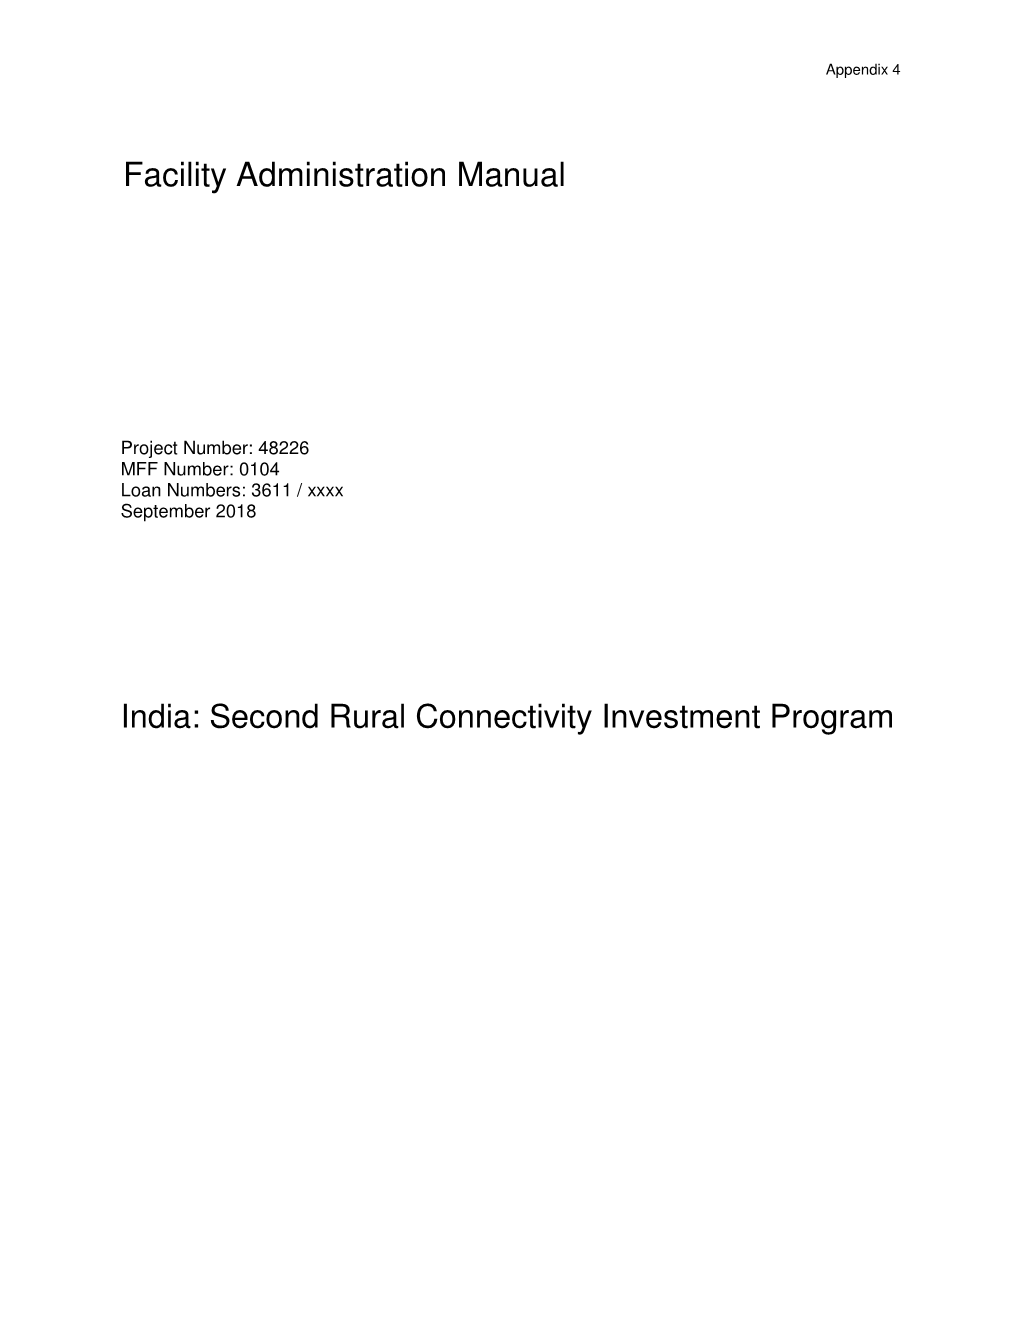 Facility Administration Manual